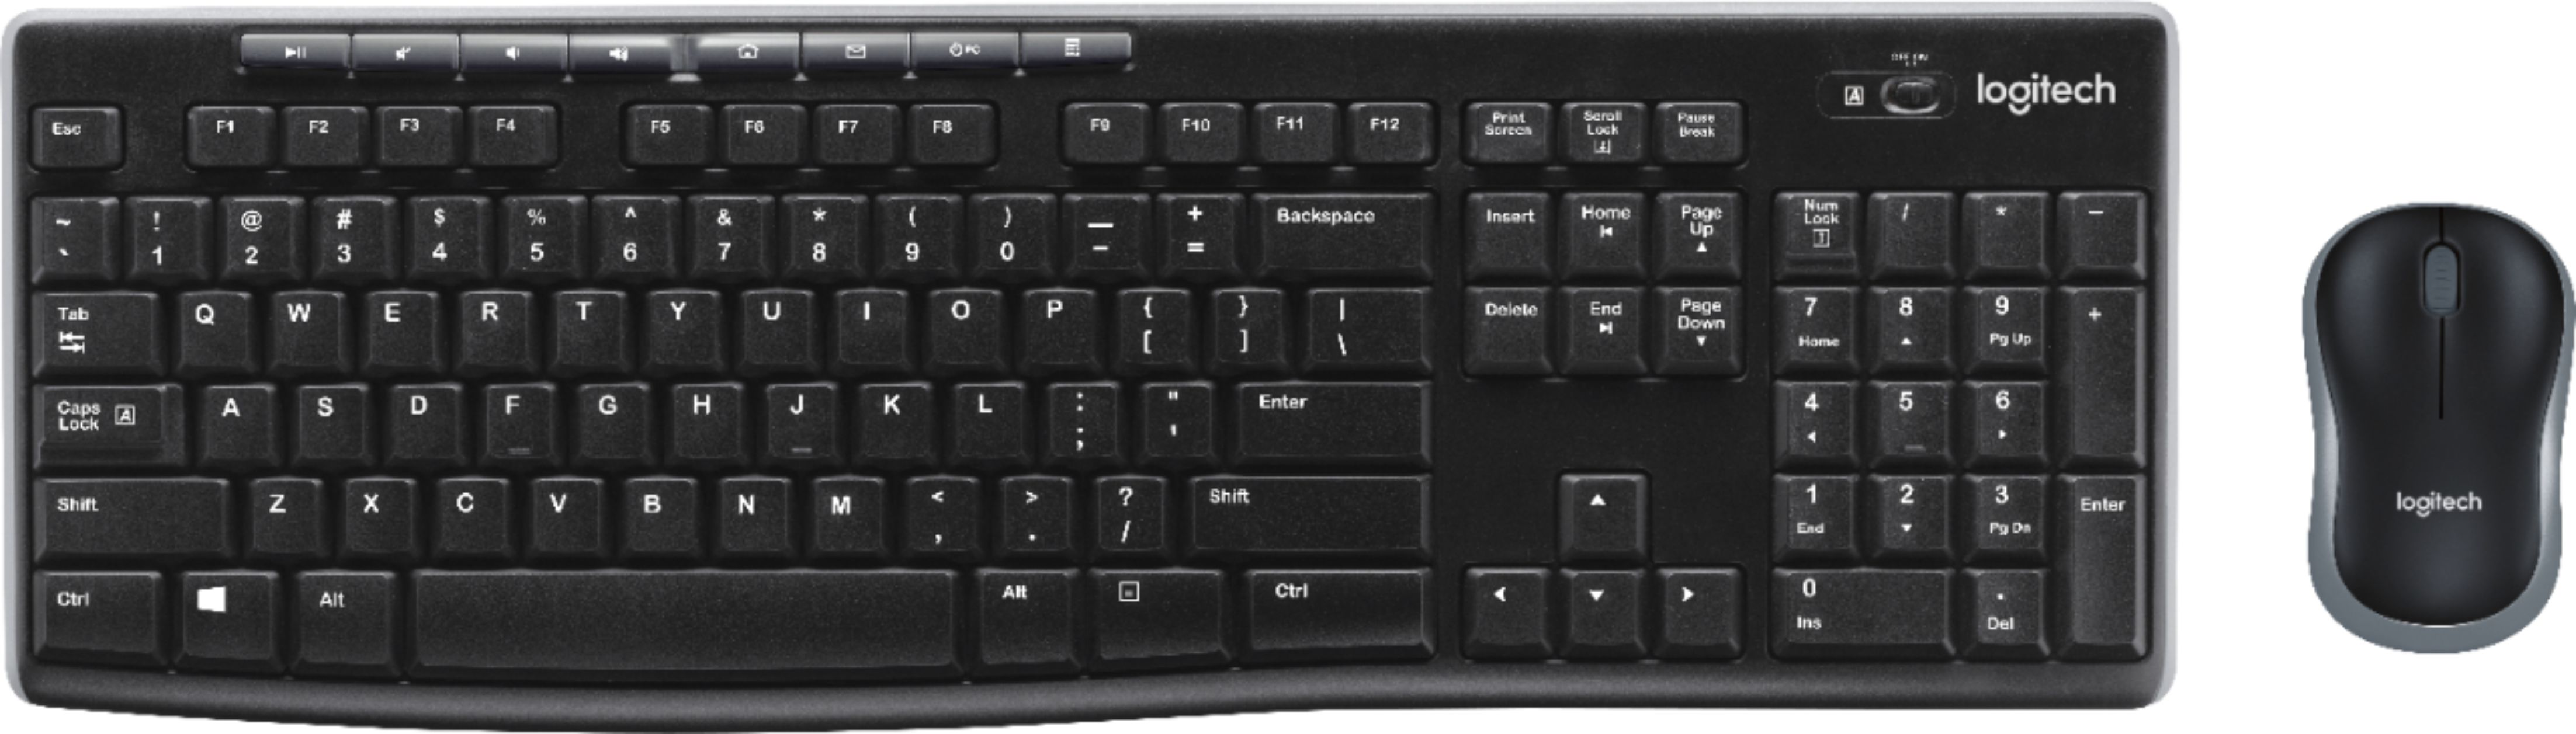 Logitech MK270 Wireless Keyboard and Mouse Free Pickup $18 - Target